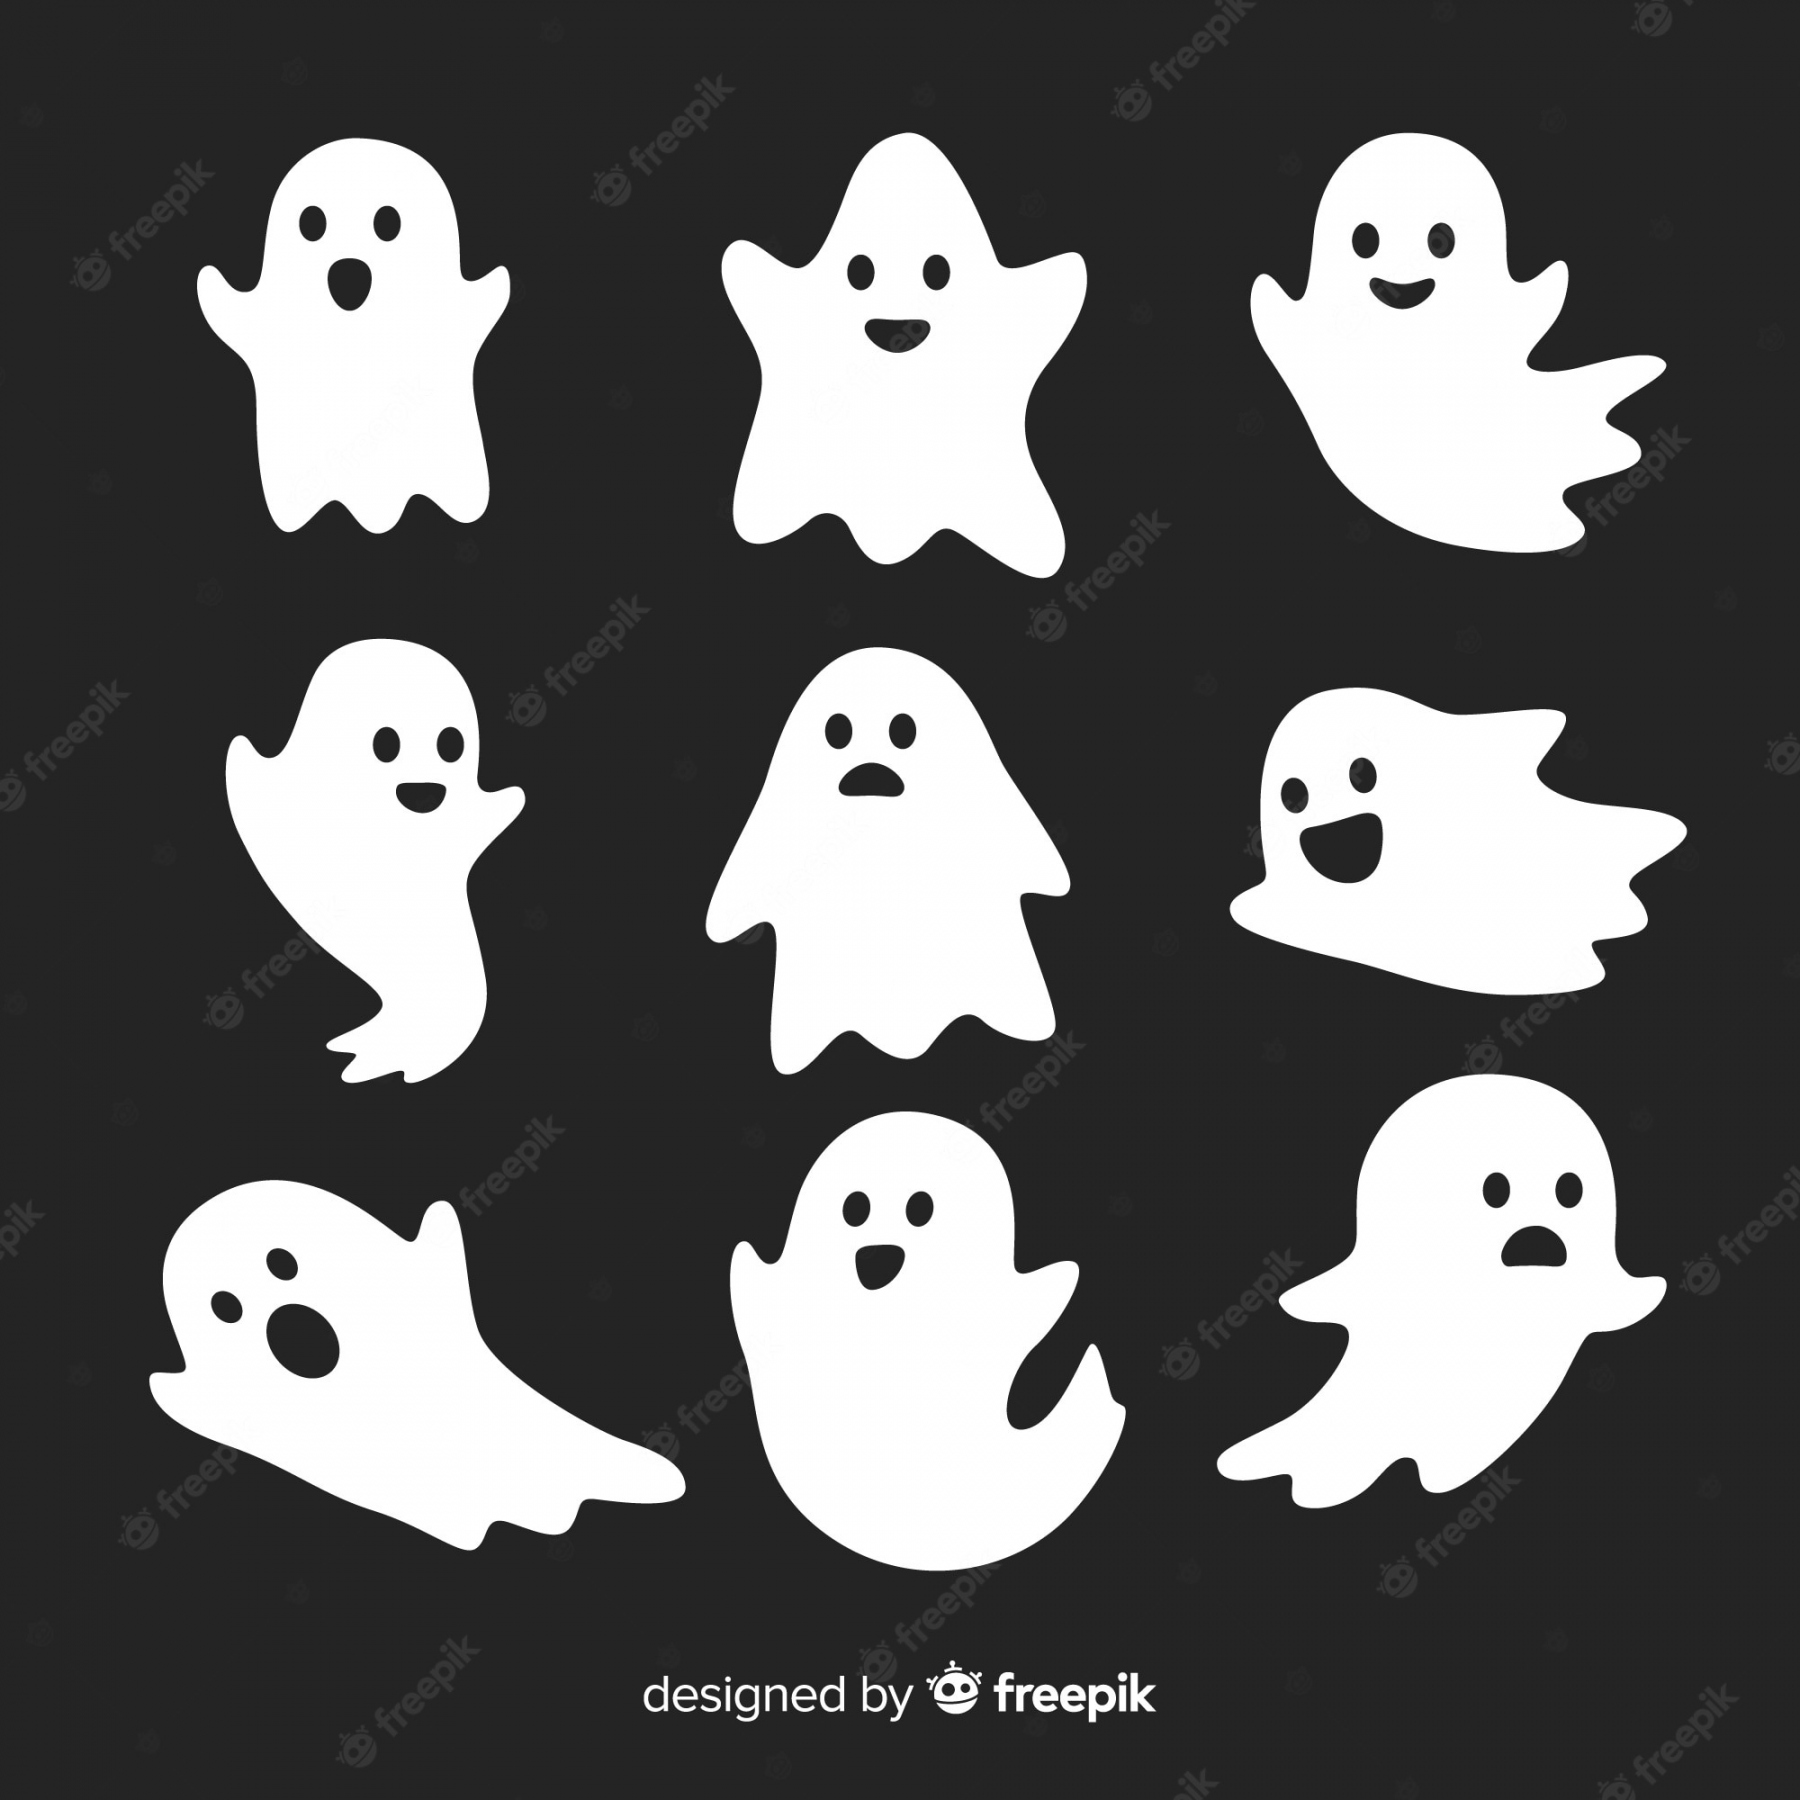 Halloween Ghost Images - Free Download on Freepik - FREE Printables - Free Ghosts